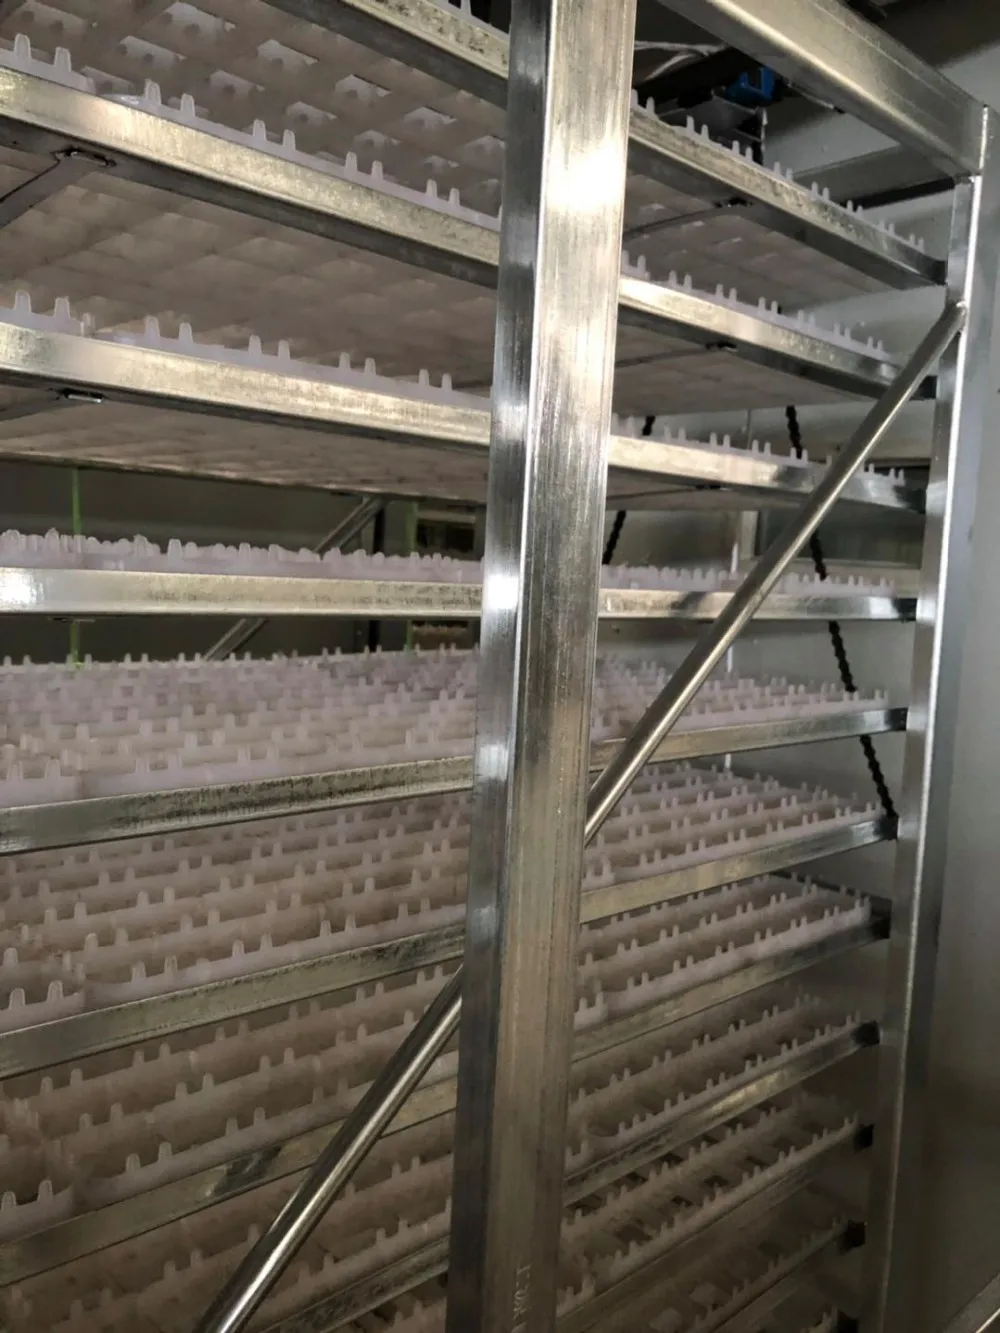 19000 eggs solar energy egg incubators sales in Dezhou